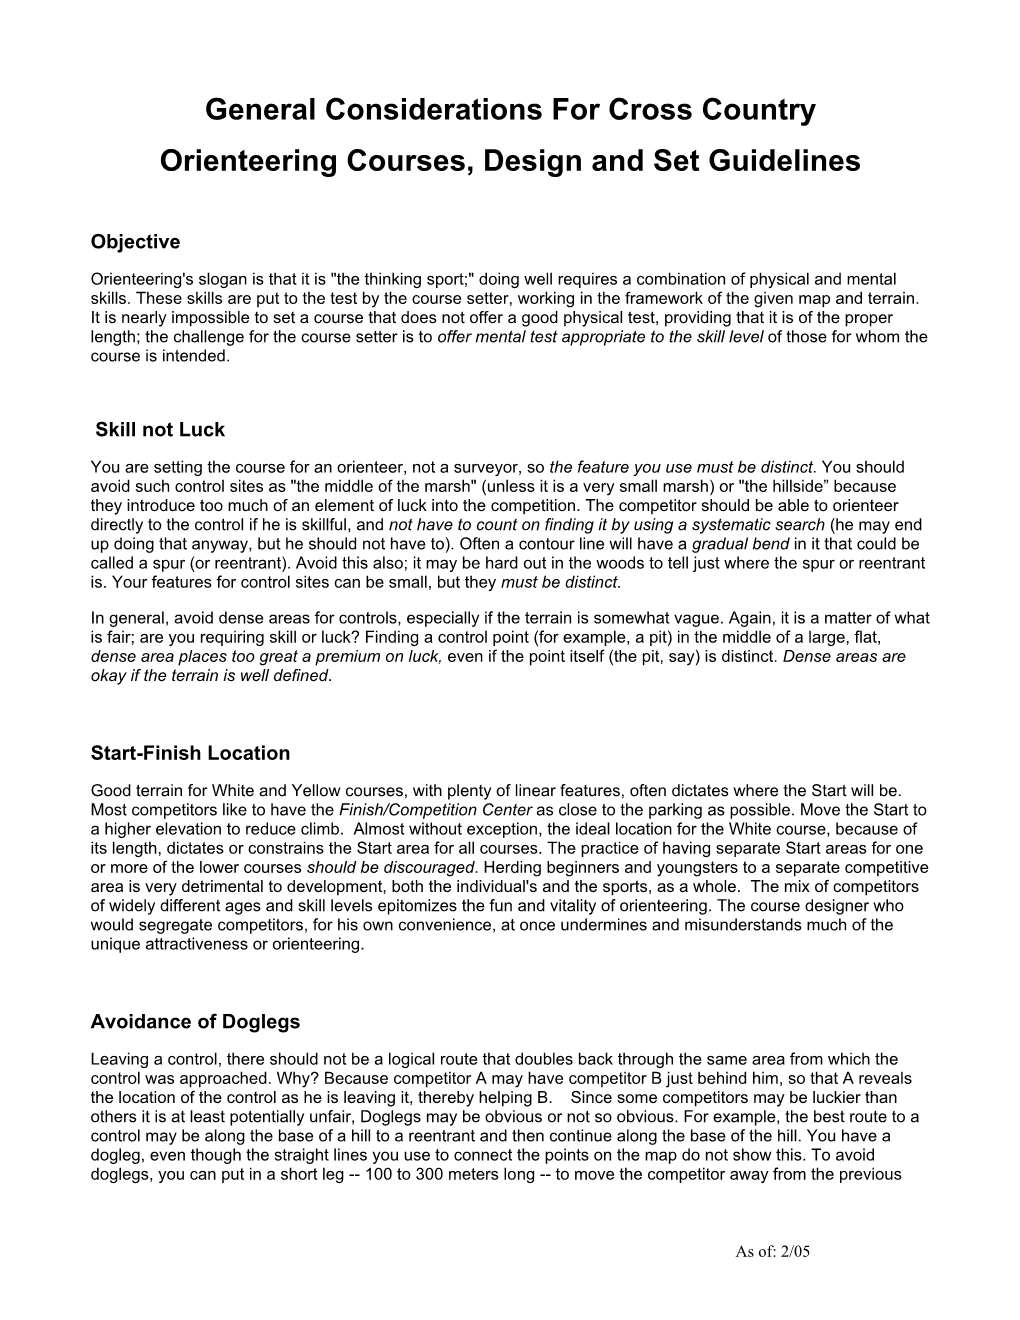 Orienteering Design Considerations